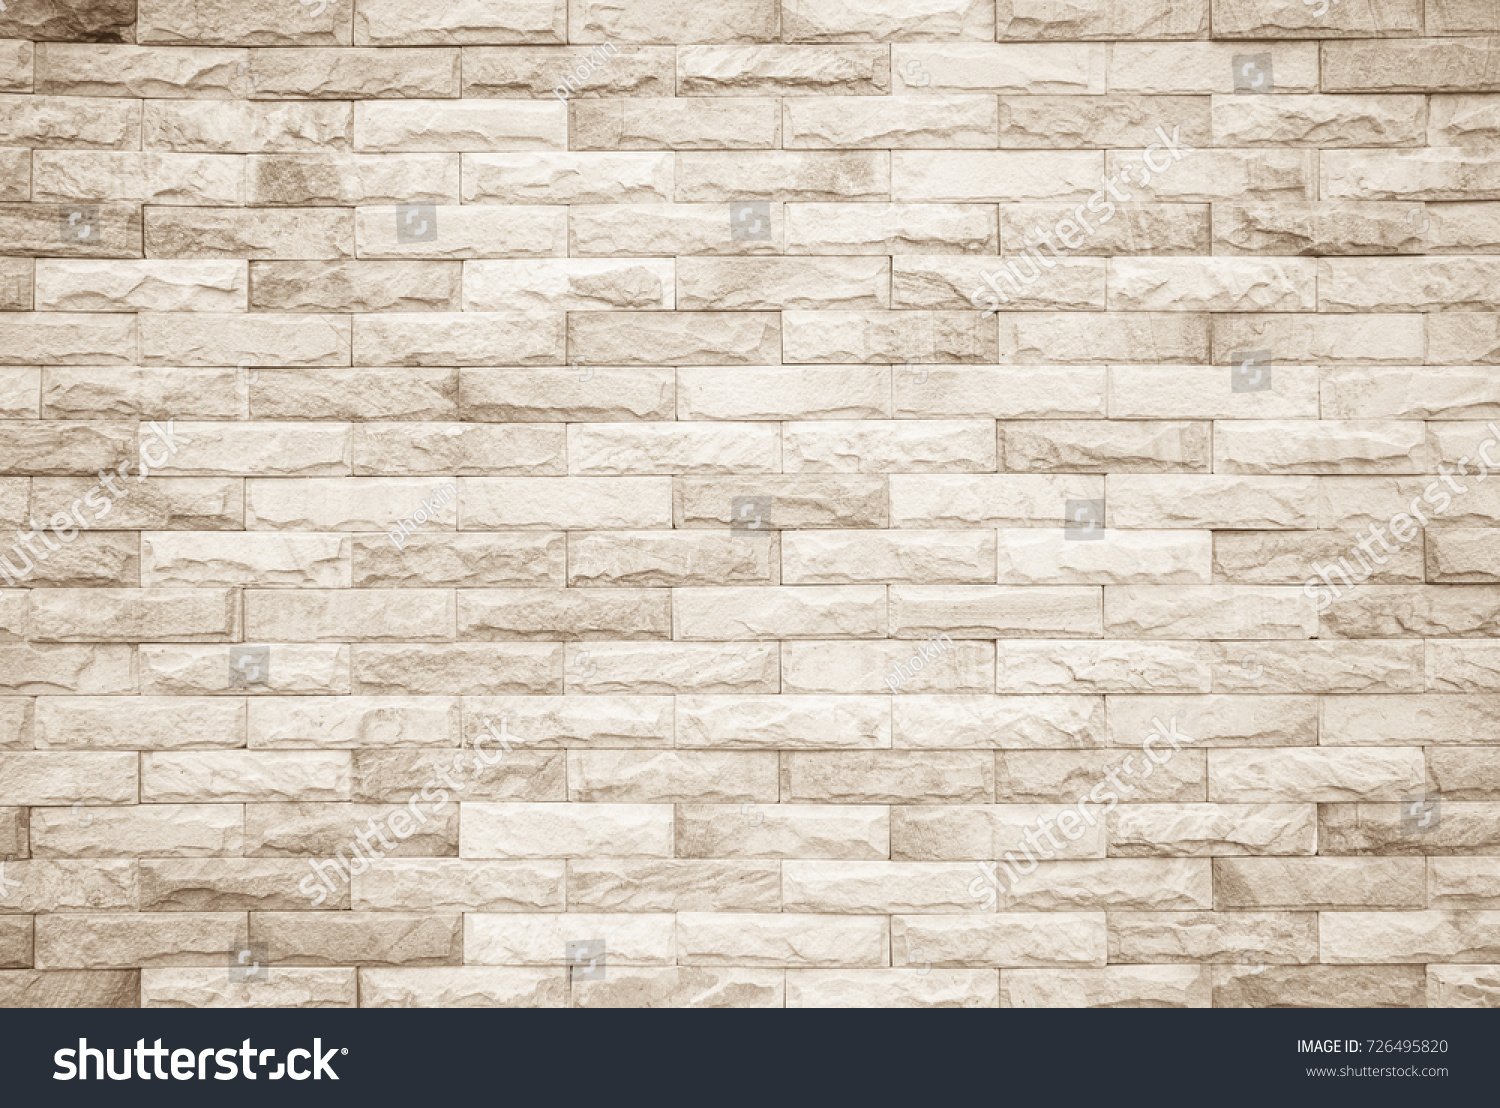 Brick Wall Ancient Stone On Texture Stockfoto Jetzt